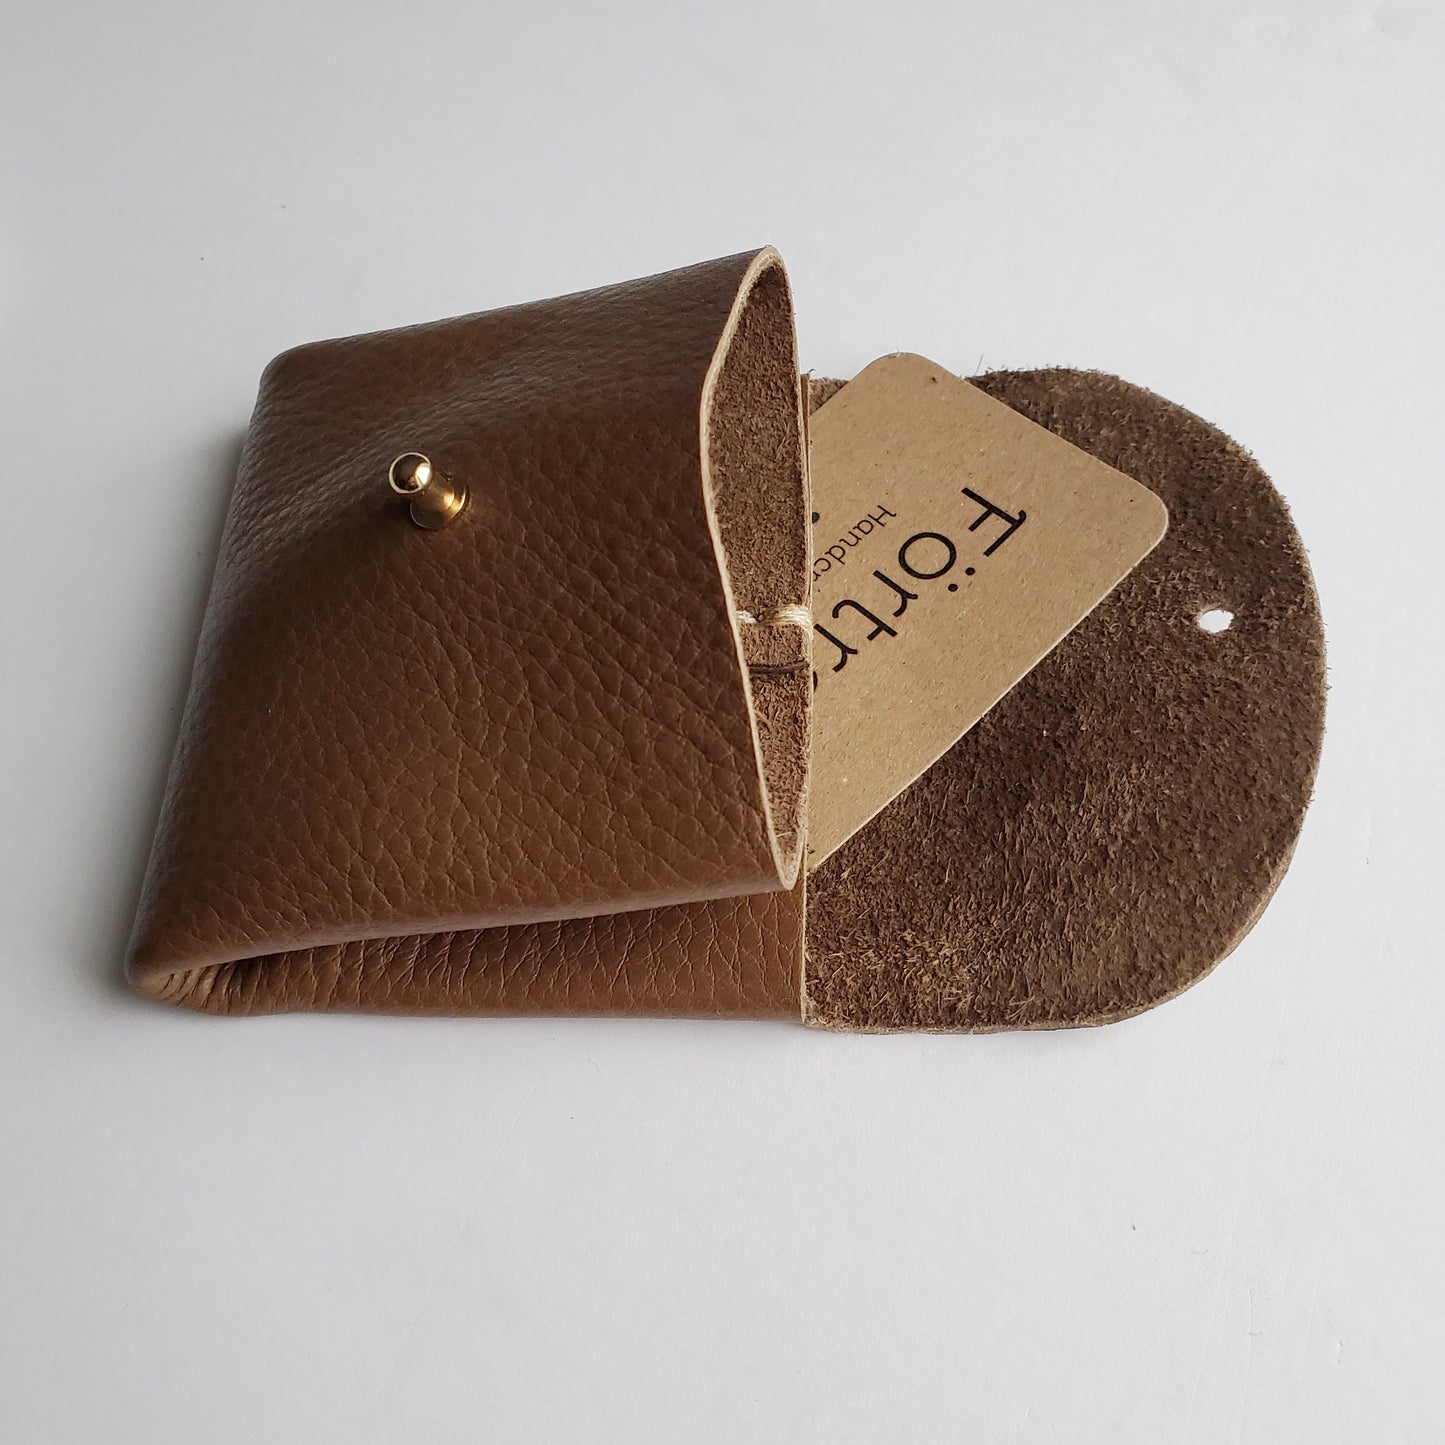 Yggdrasil wallet - surplus leather chocolate